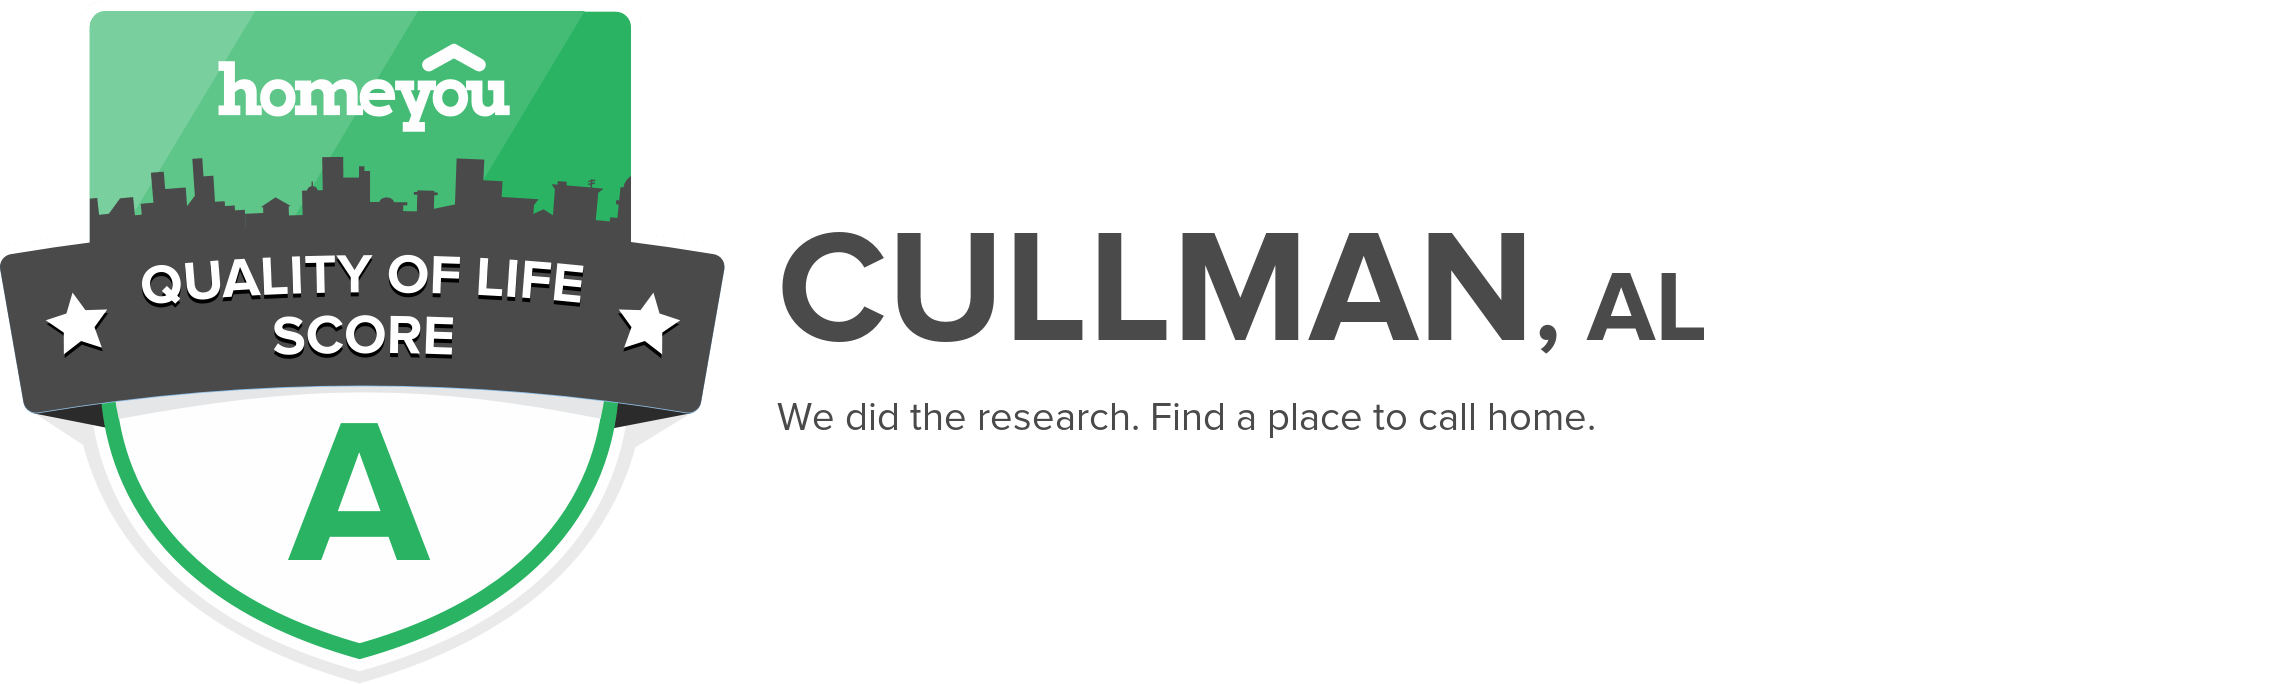 Cullman, AL